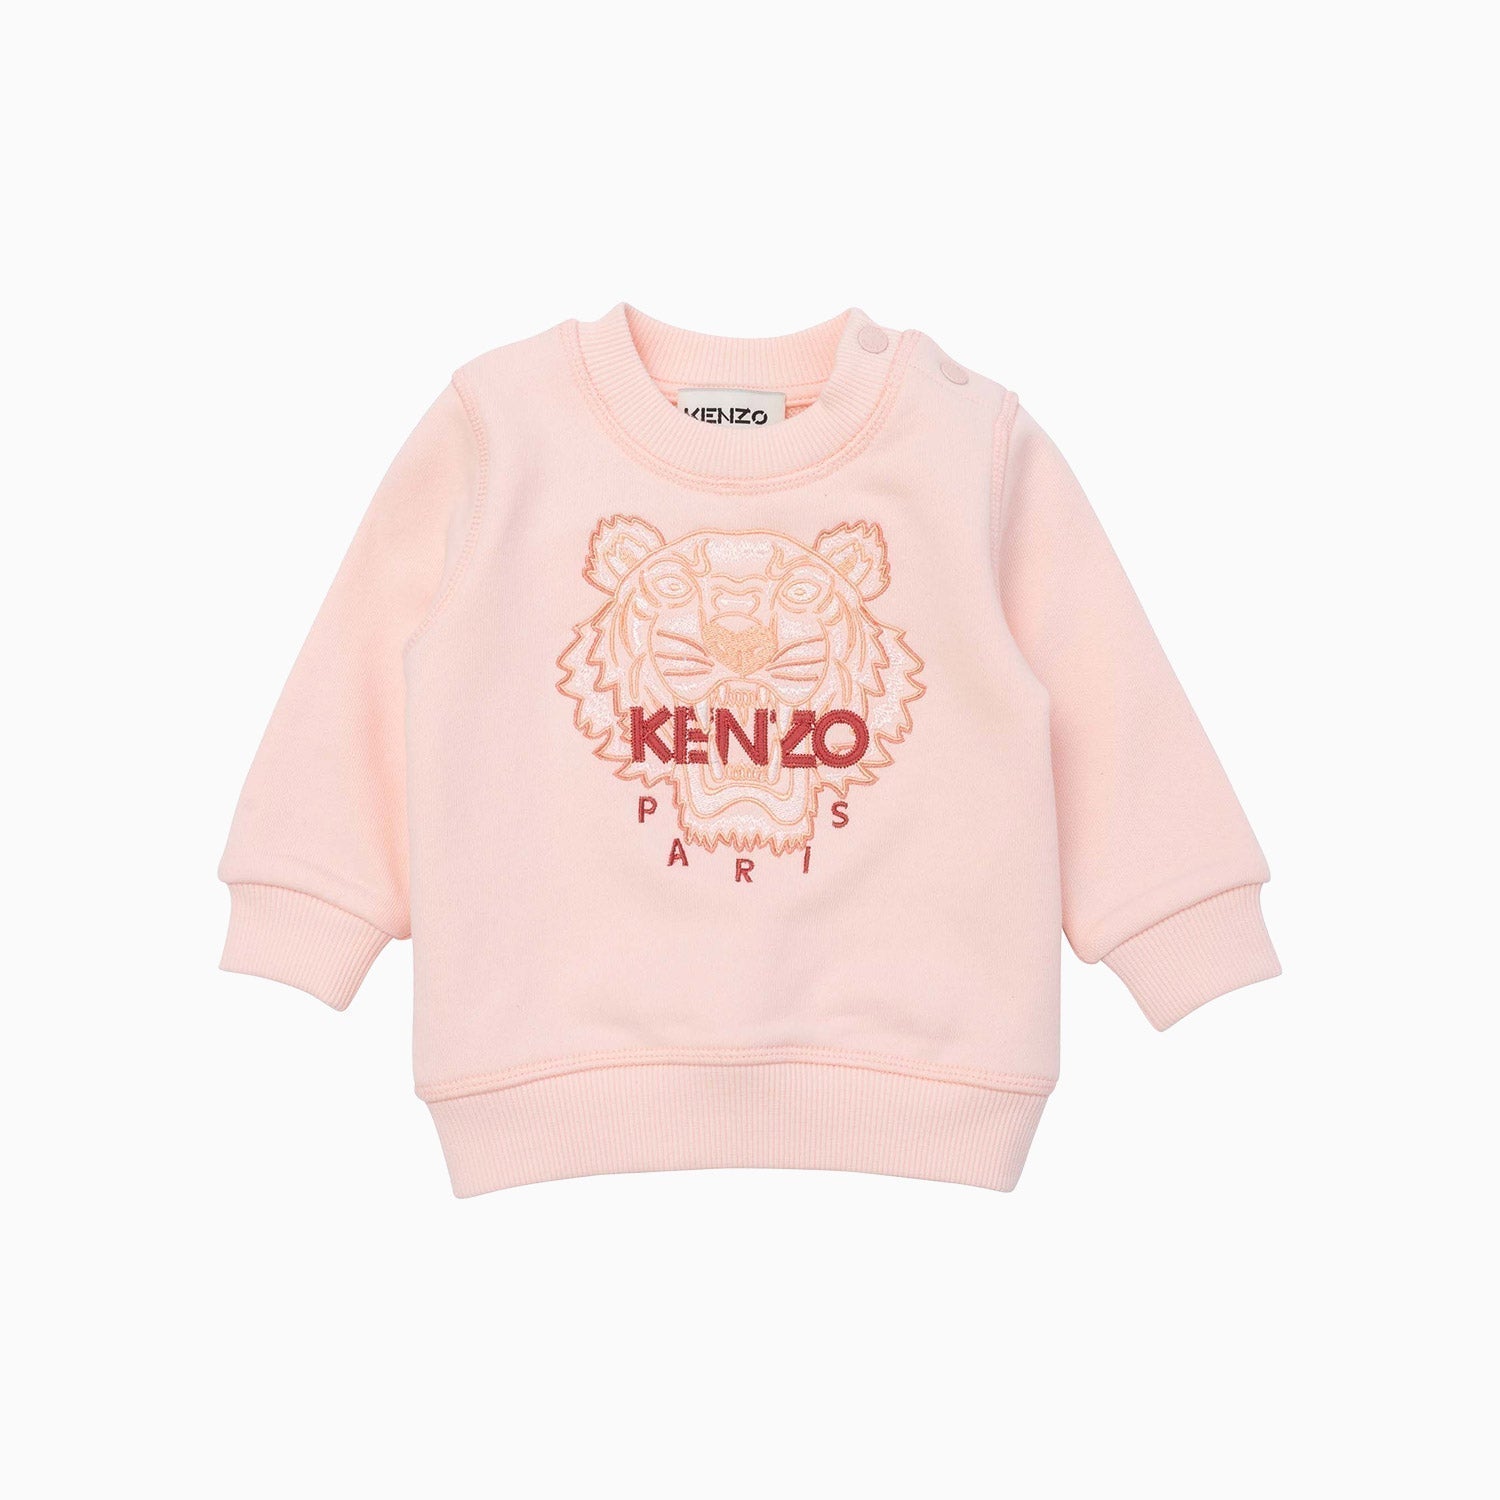 Kenzo Kid's Logo Printed Sweatshirt - Color: Pink - Kids Premium Clothing -